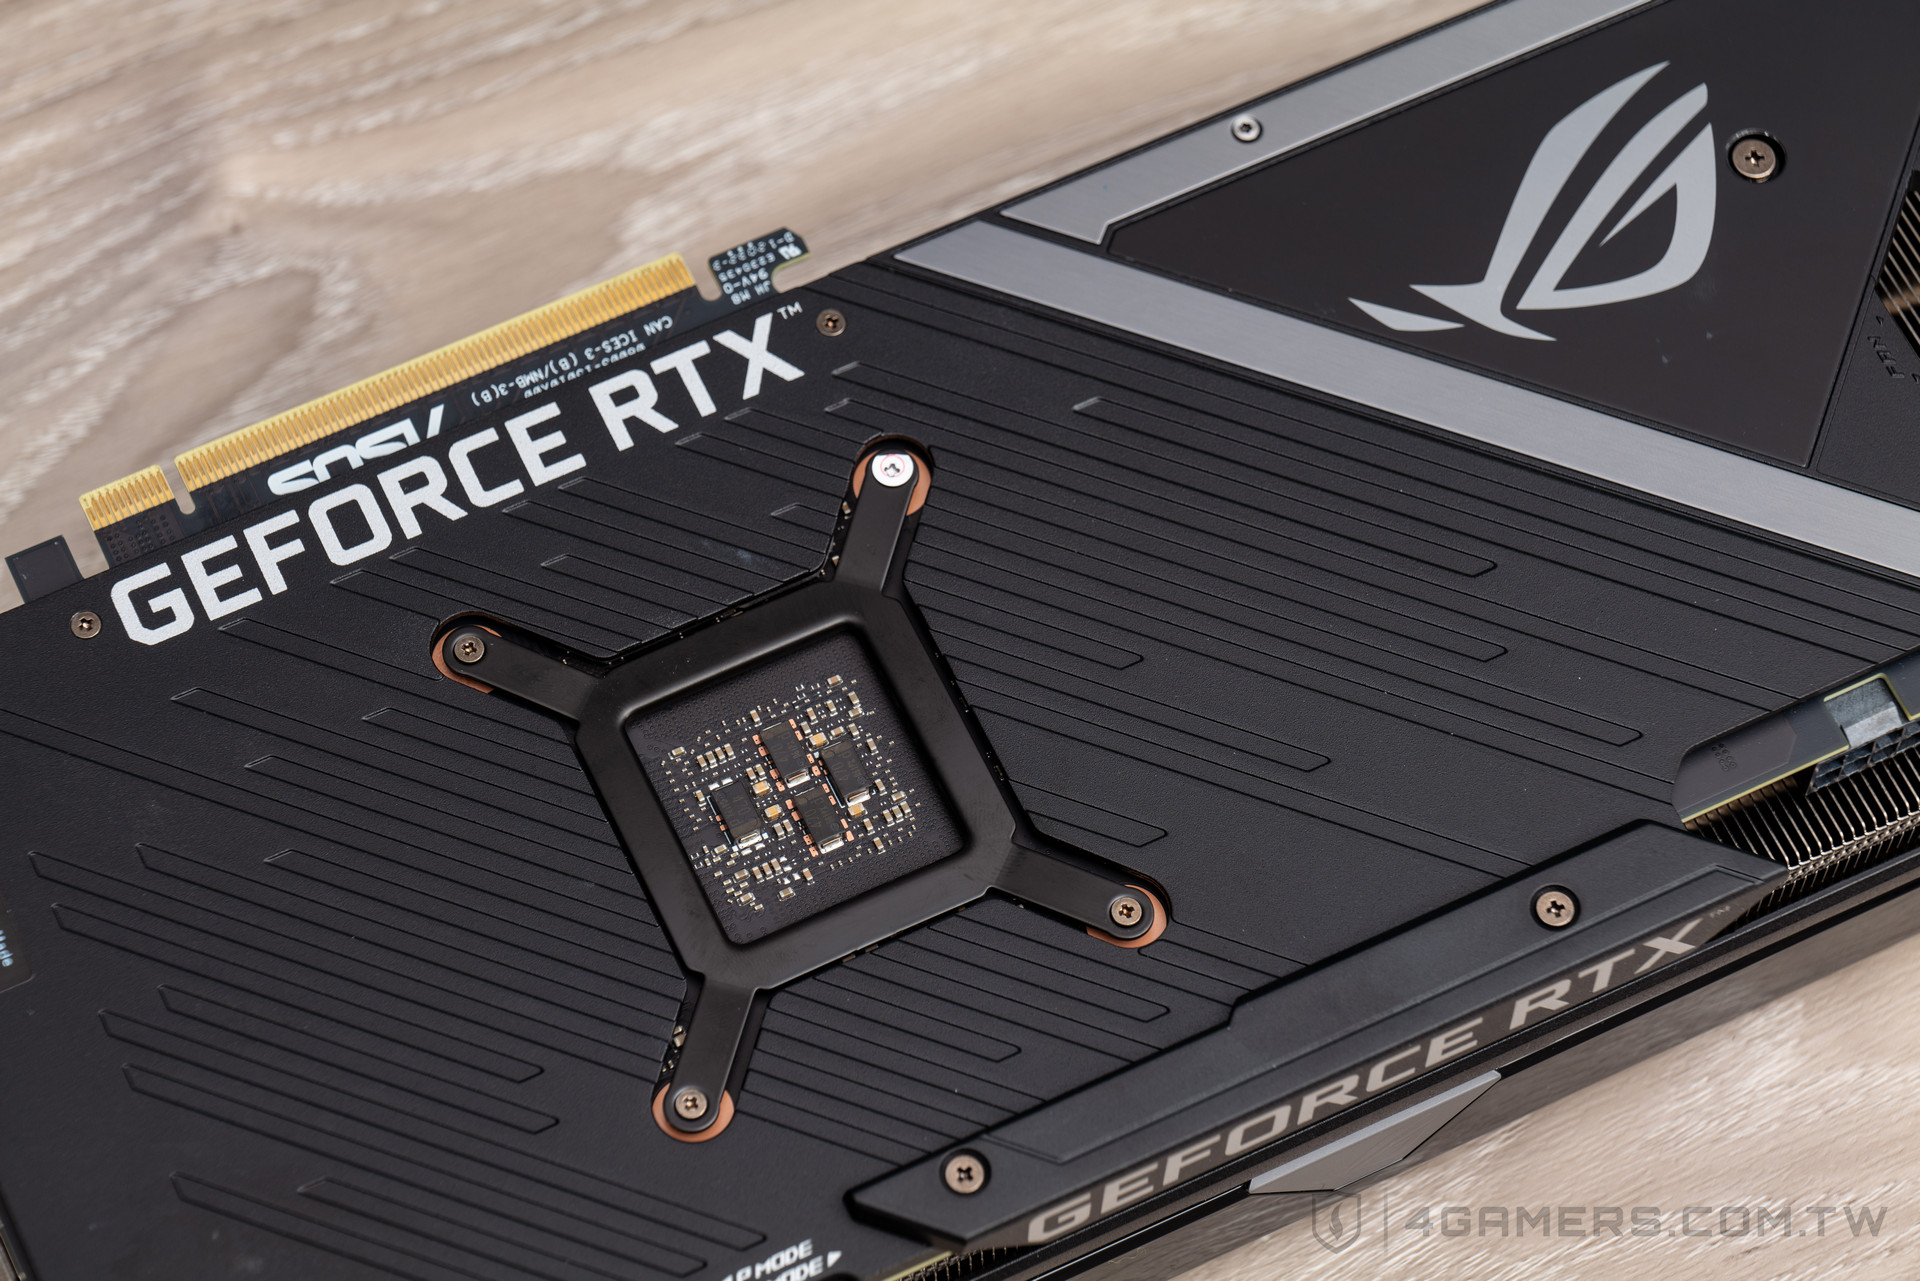 ASUS 華碩 ROG Strix GeForce RTX 3070 O8G